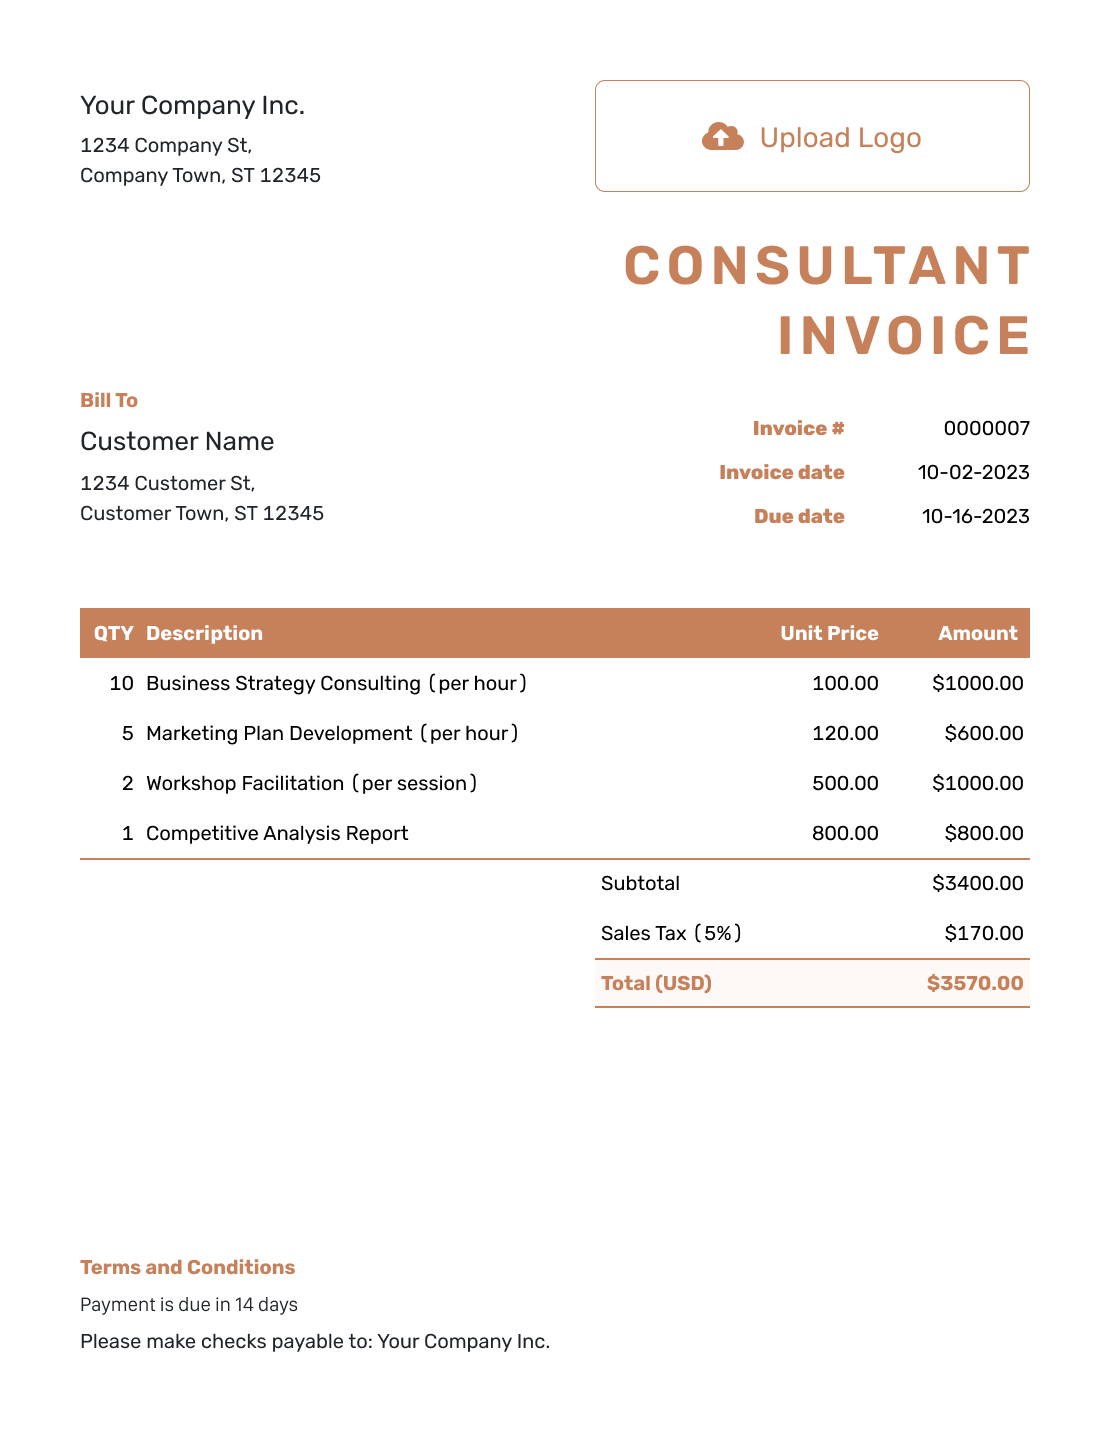 Standard Consultant Invoice Template